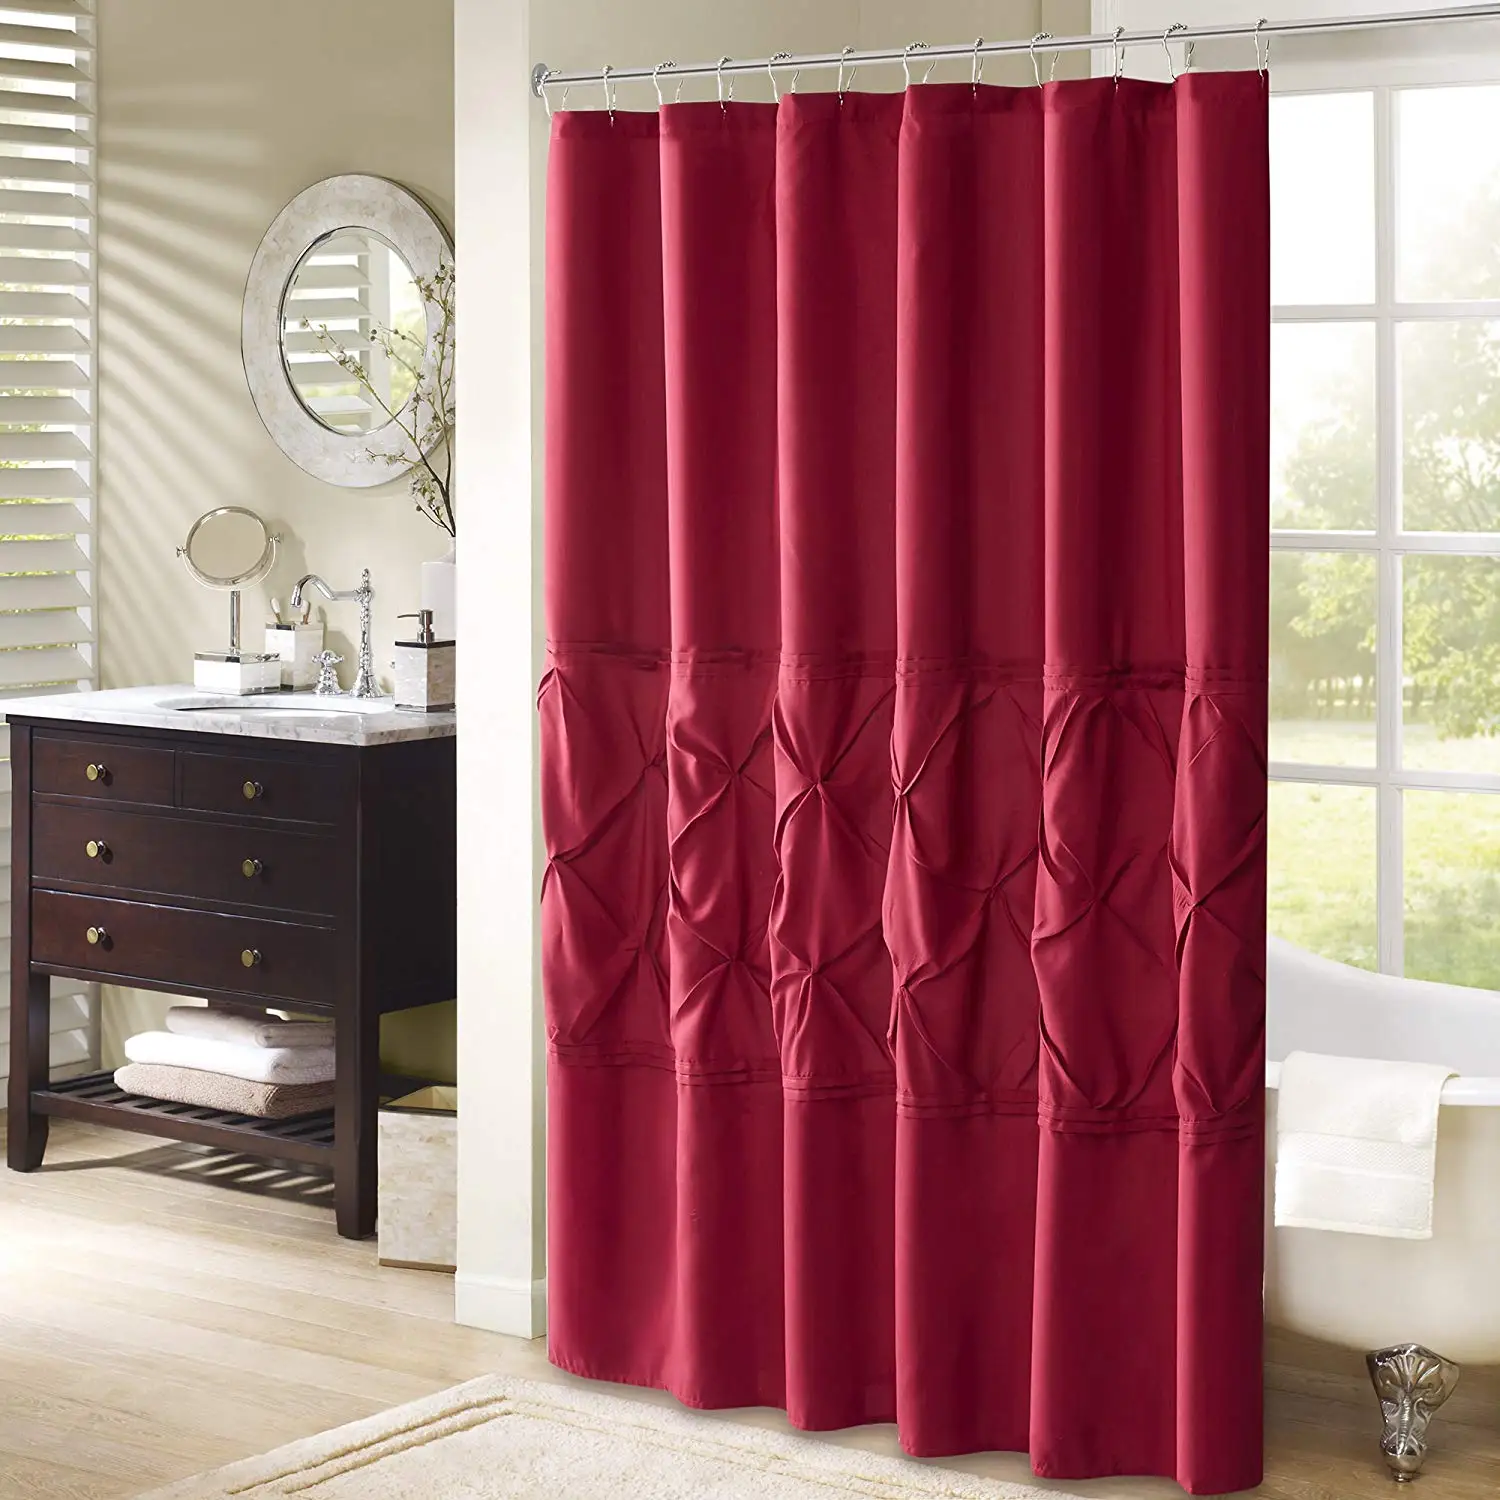 Classy Bathroom Decor Hotel Hookless Shower Curtain - Buy Classy Shower ...